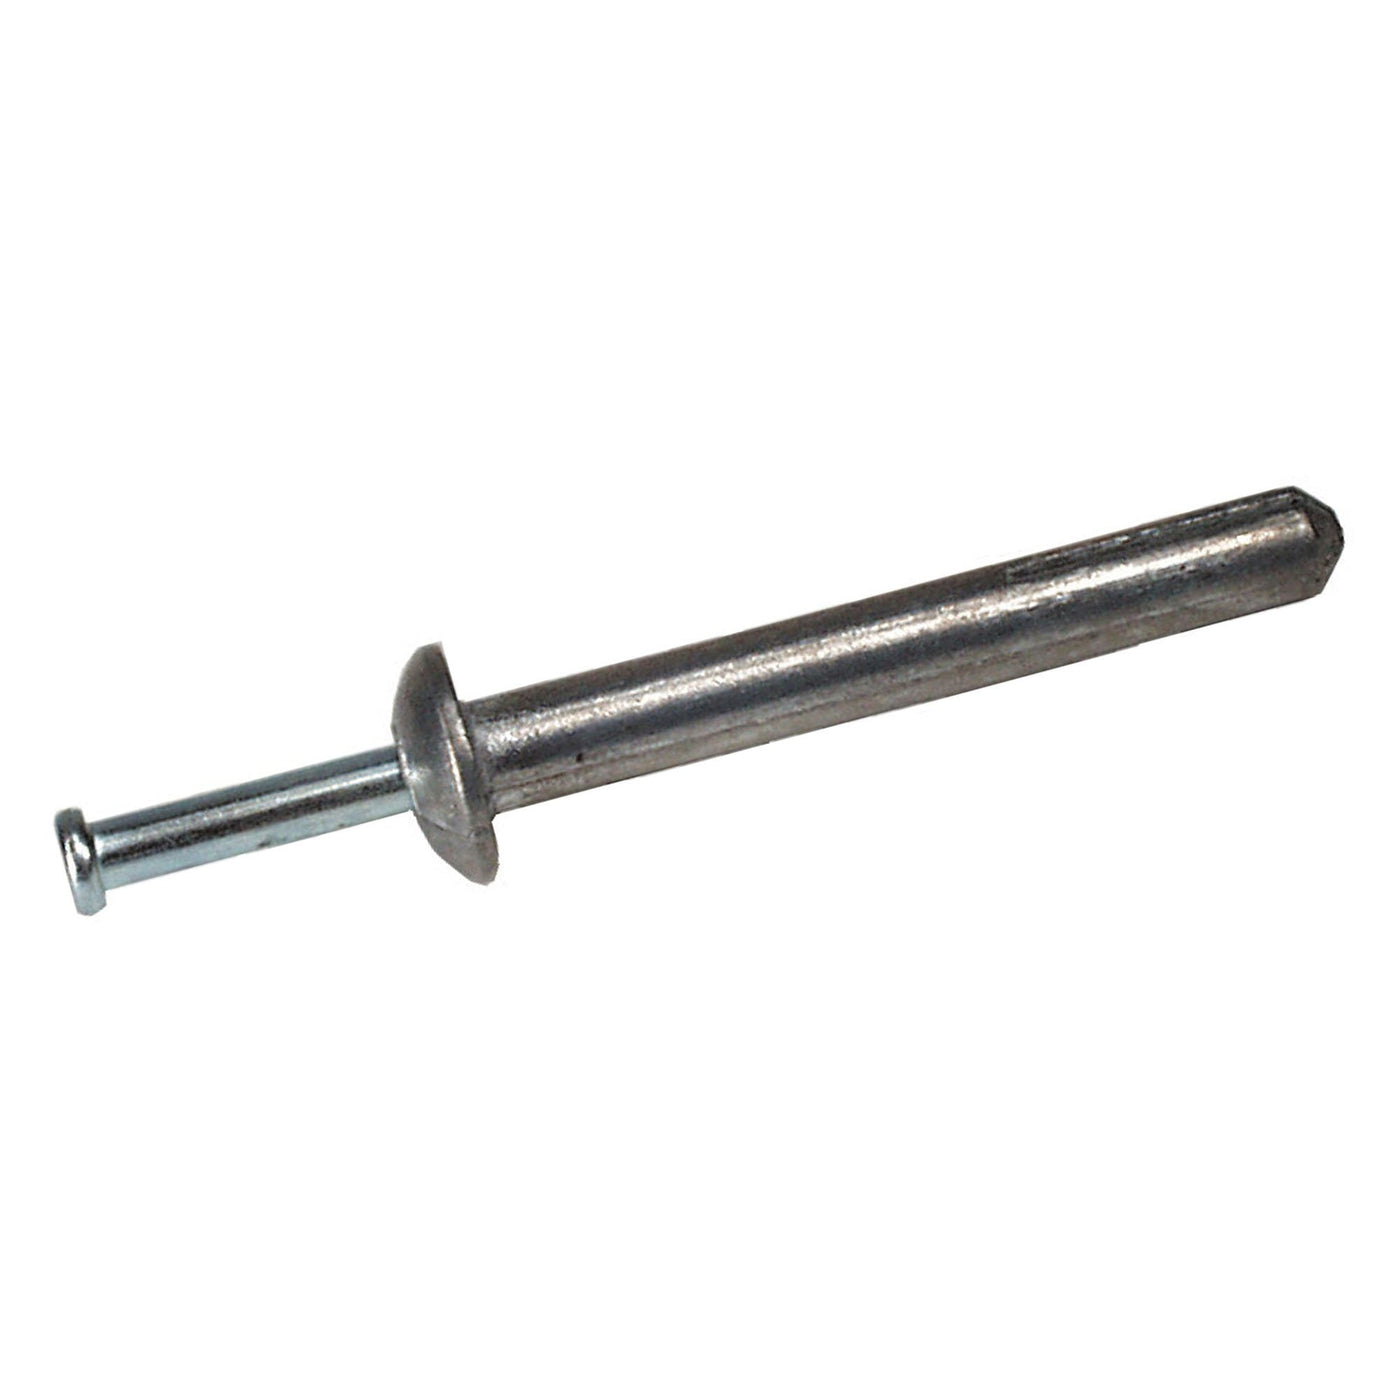 1/4 x 2 1/2 Simpson Zinc Nailon™ Pin Drive Anchor Mushroom Head 304 Stainless Steel Pin (100)